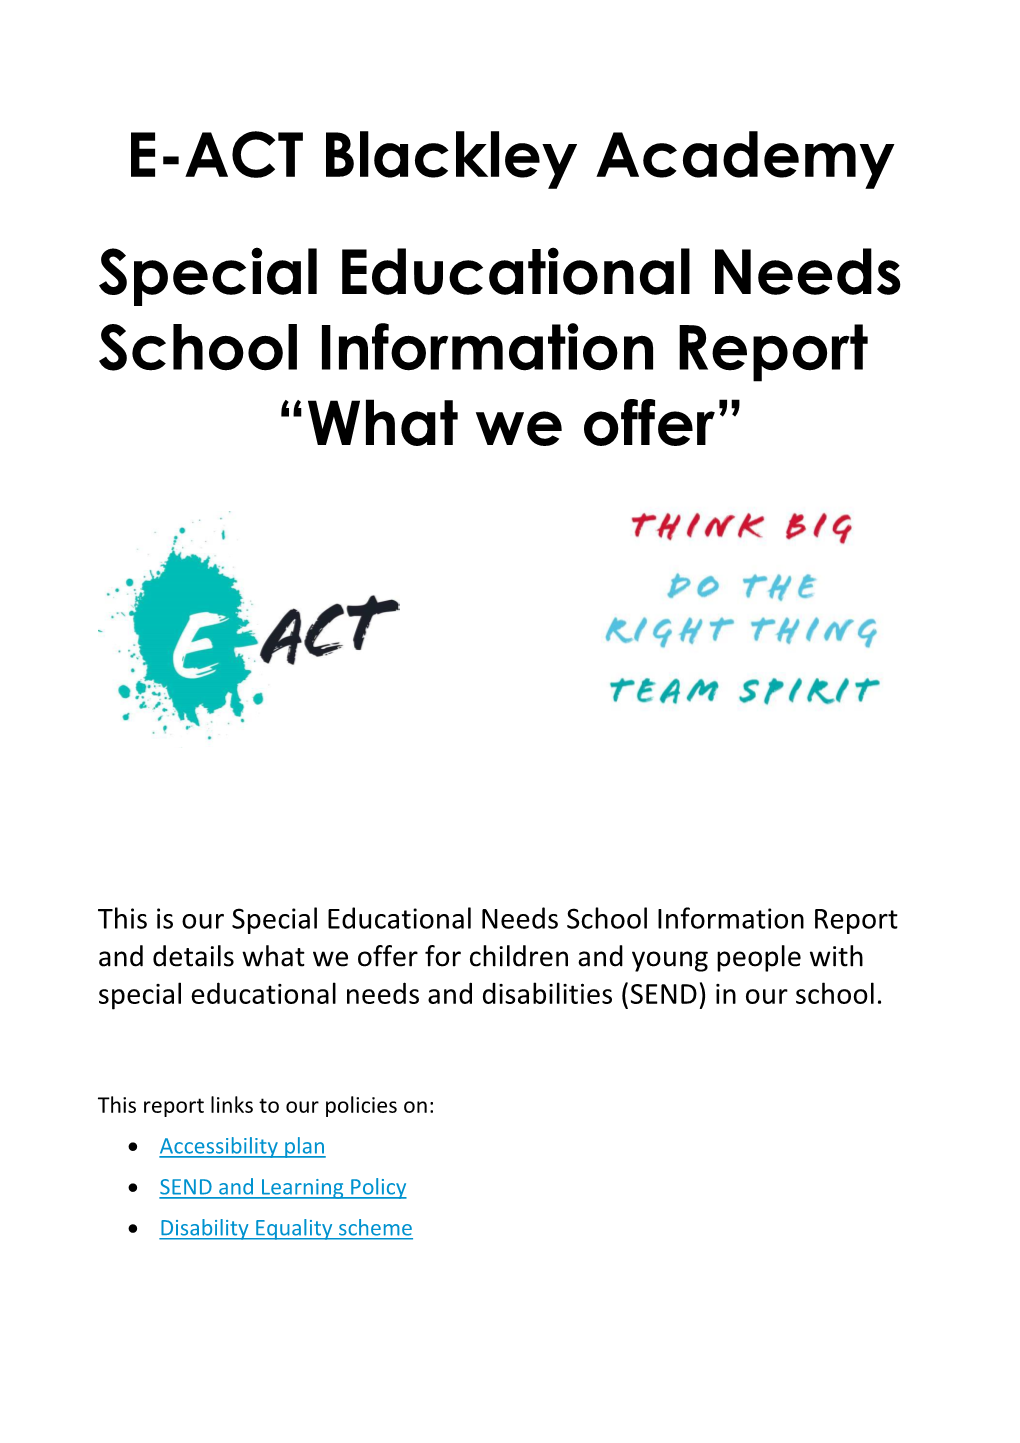 E-ACT Blackley Academy Special Educational Needs School